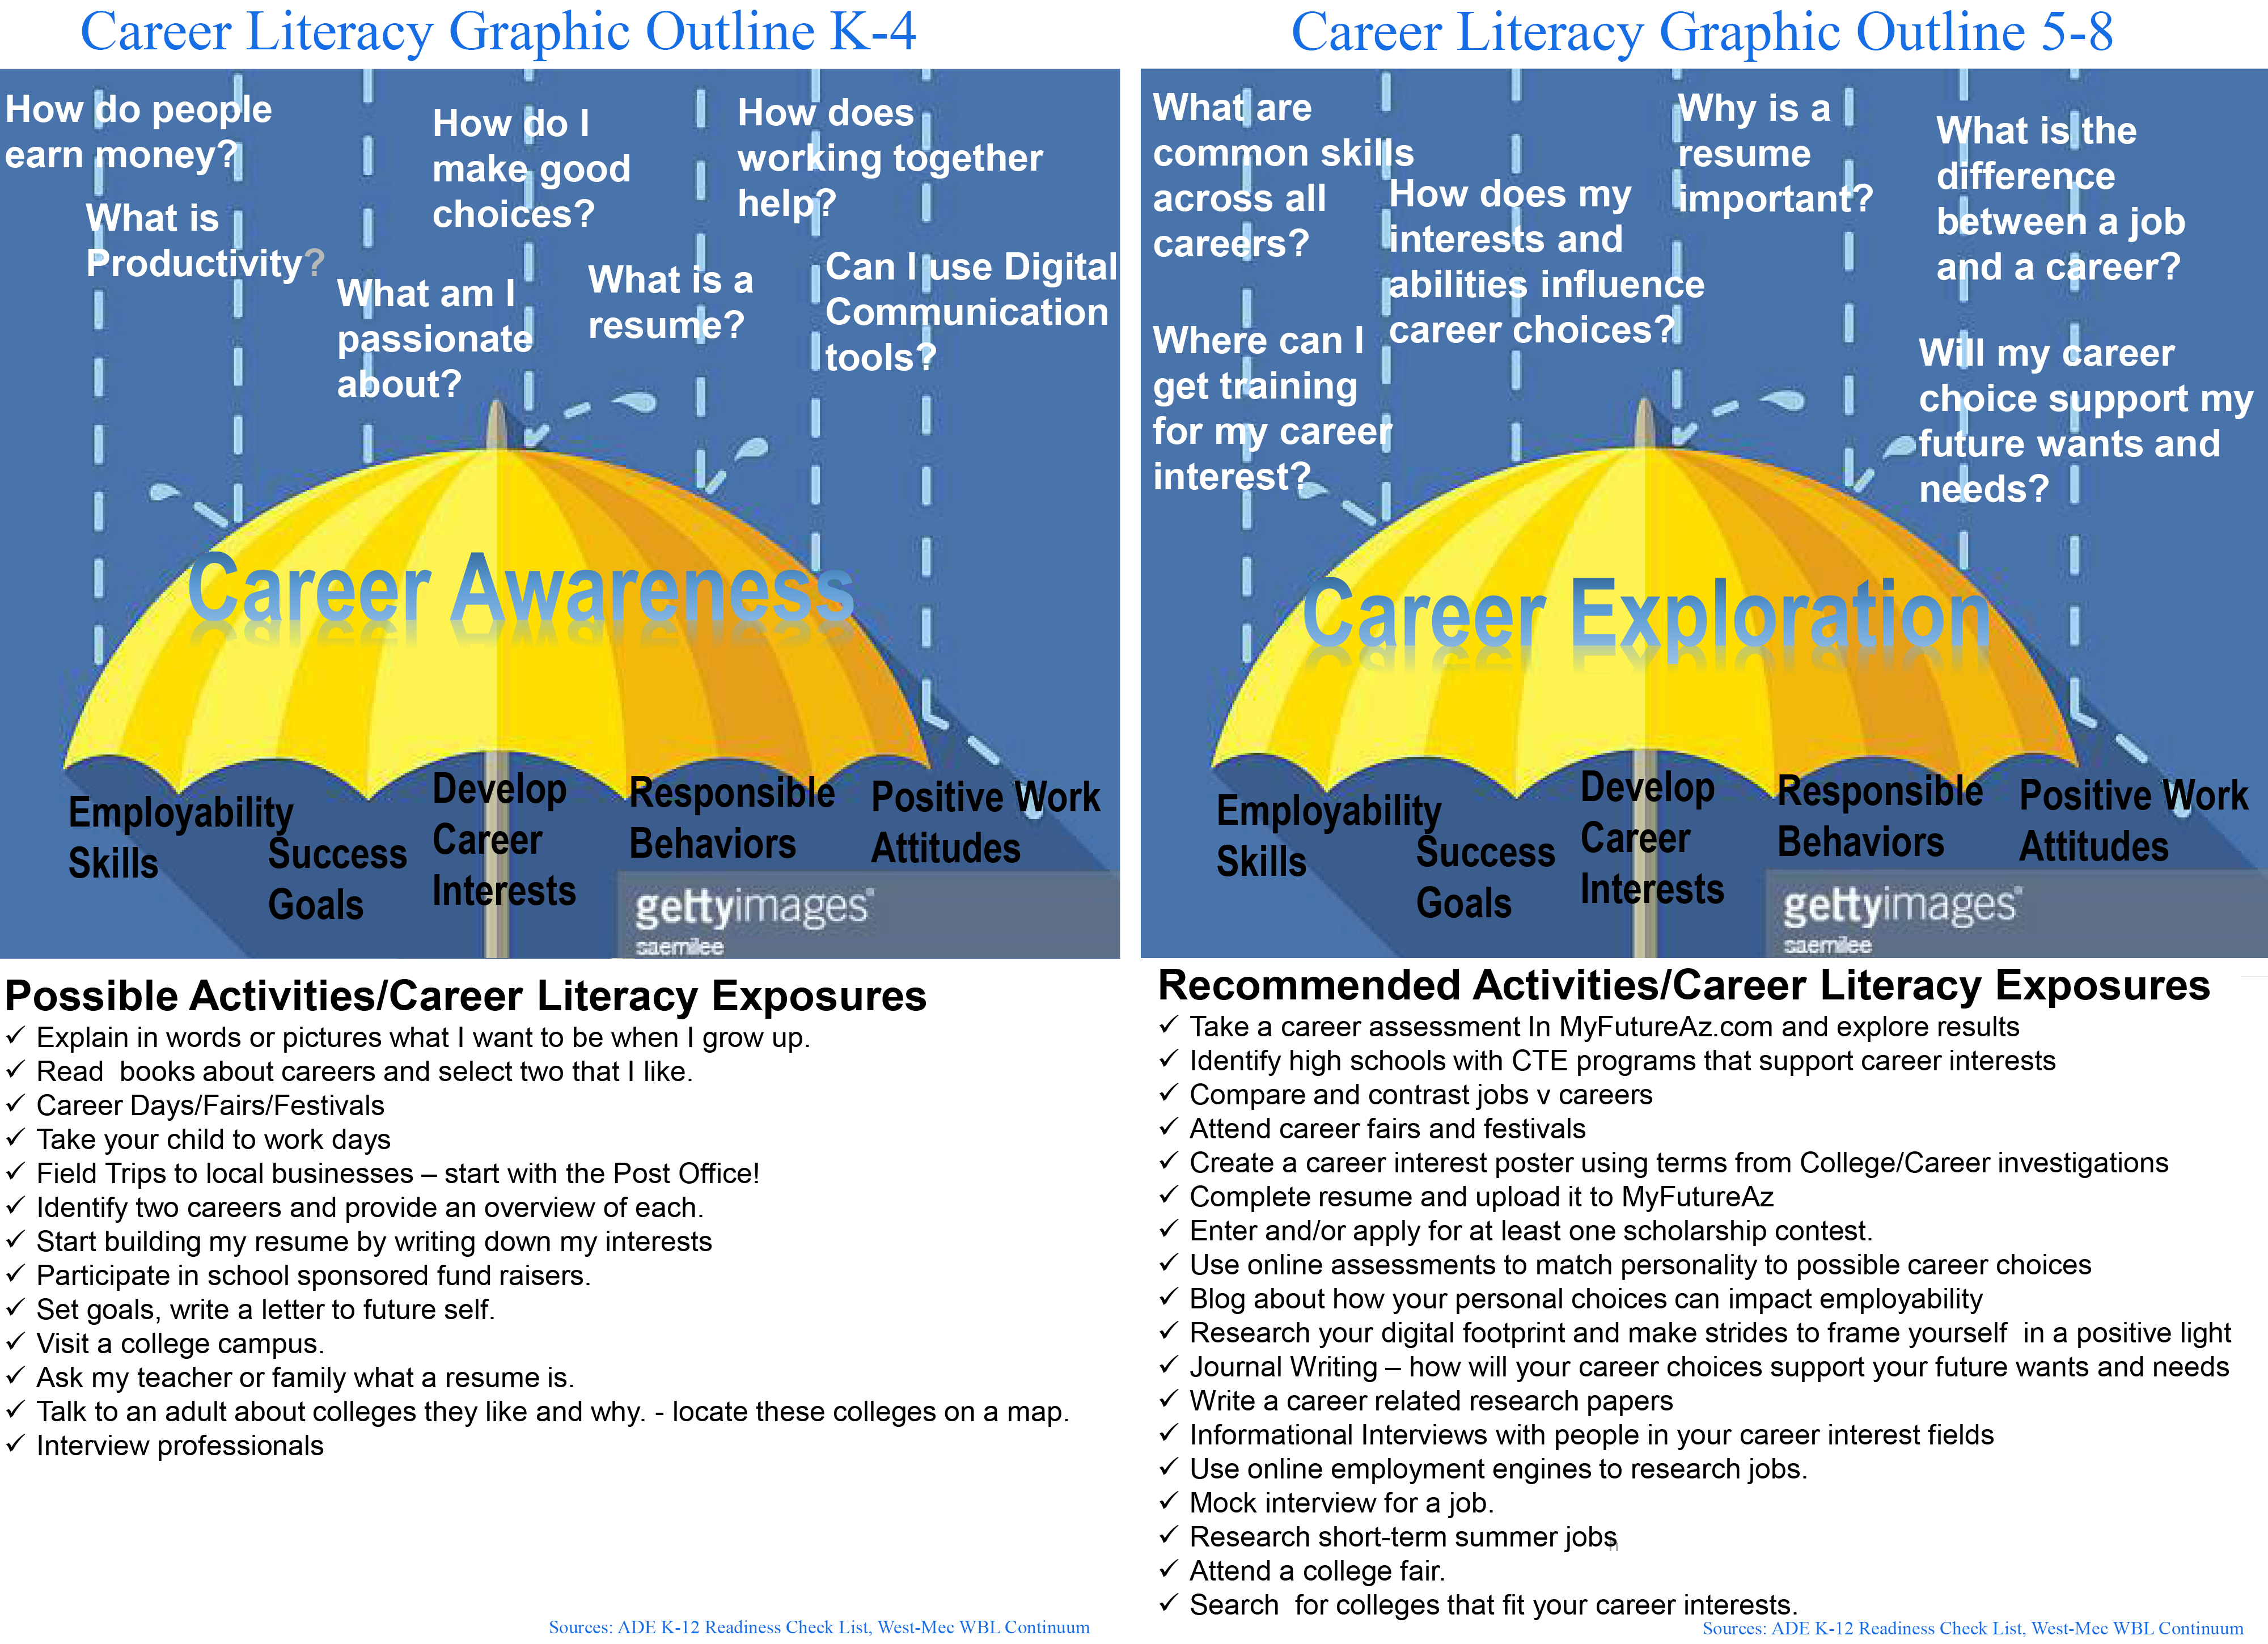 Career Literacy Umbrella Images